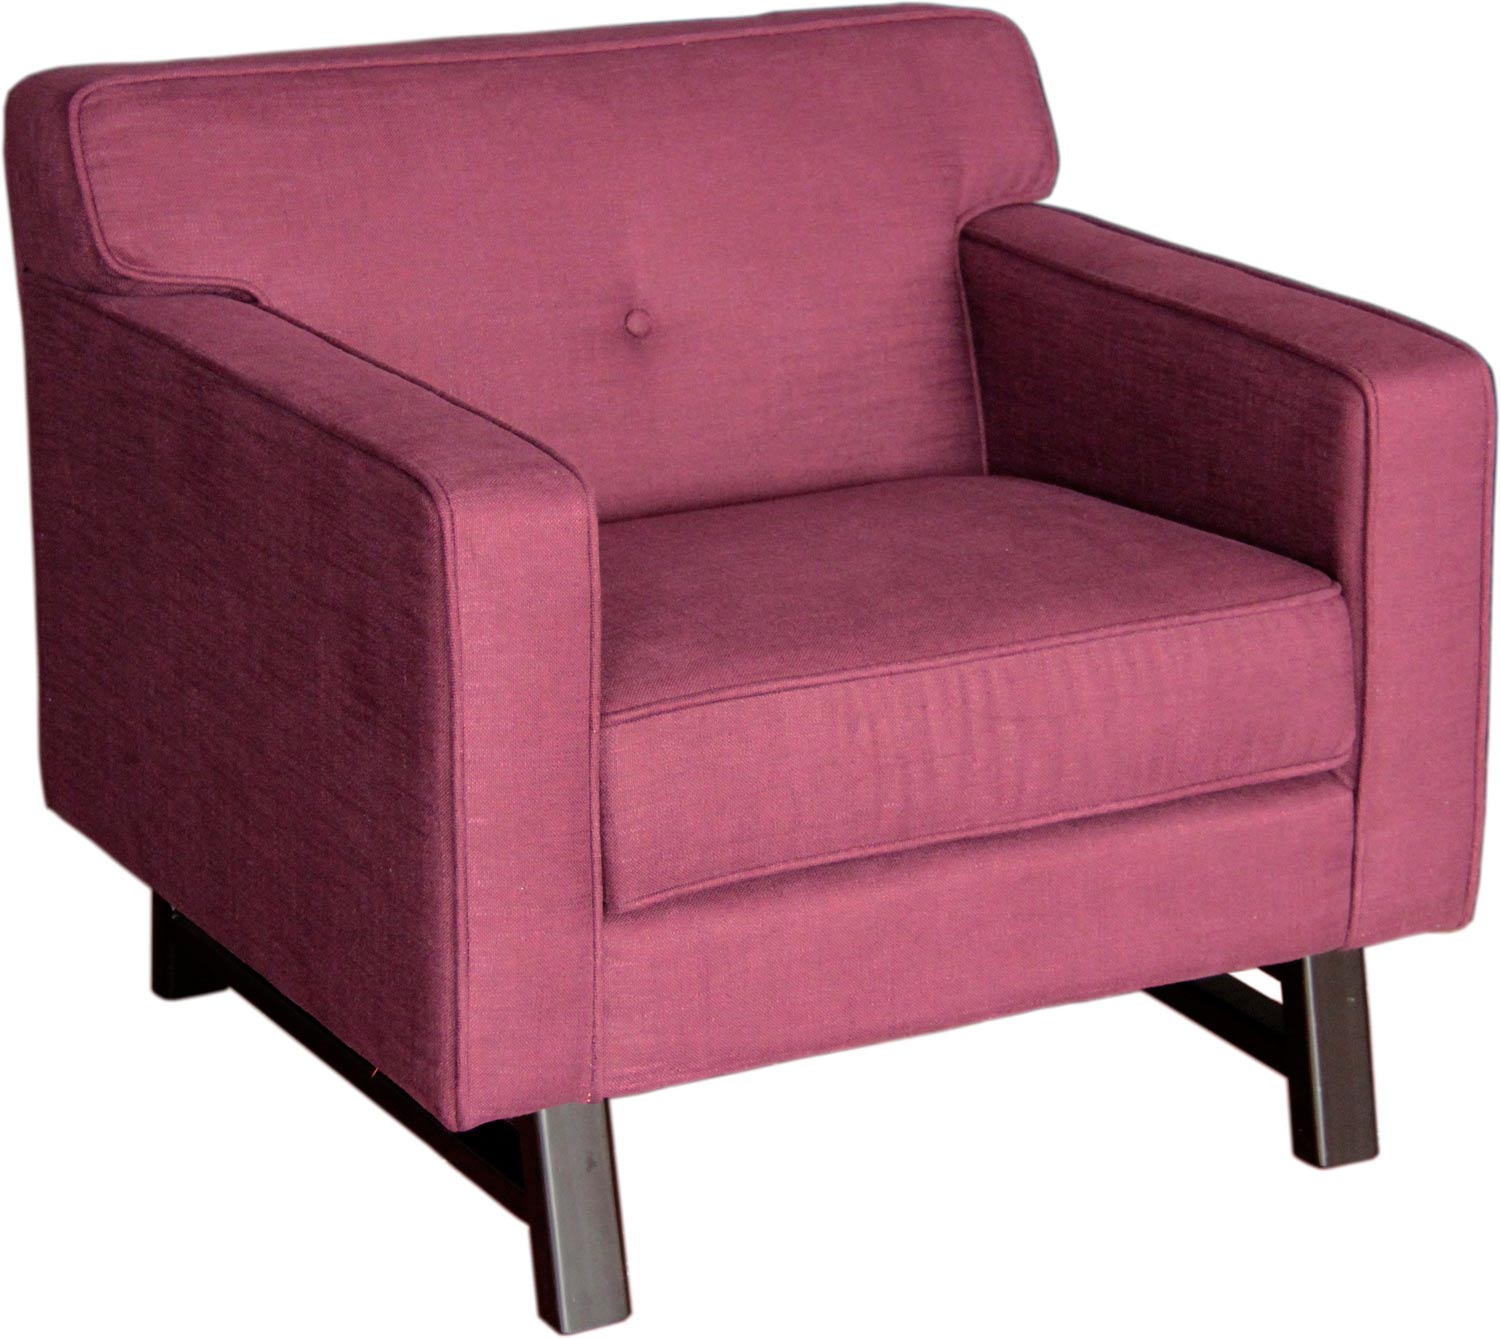 Armen Living Halston Arm Chair - Claret Purple Fabric